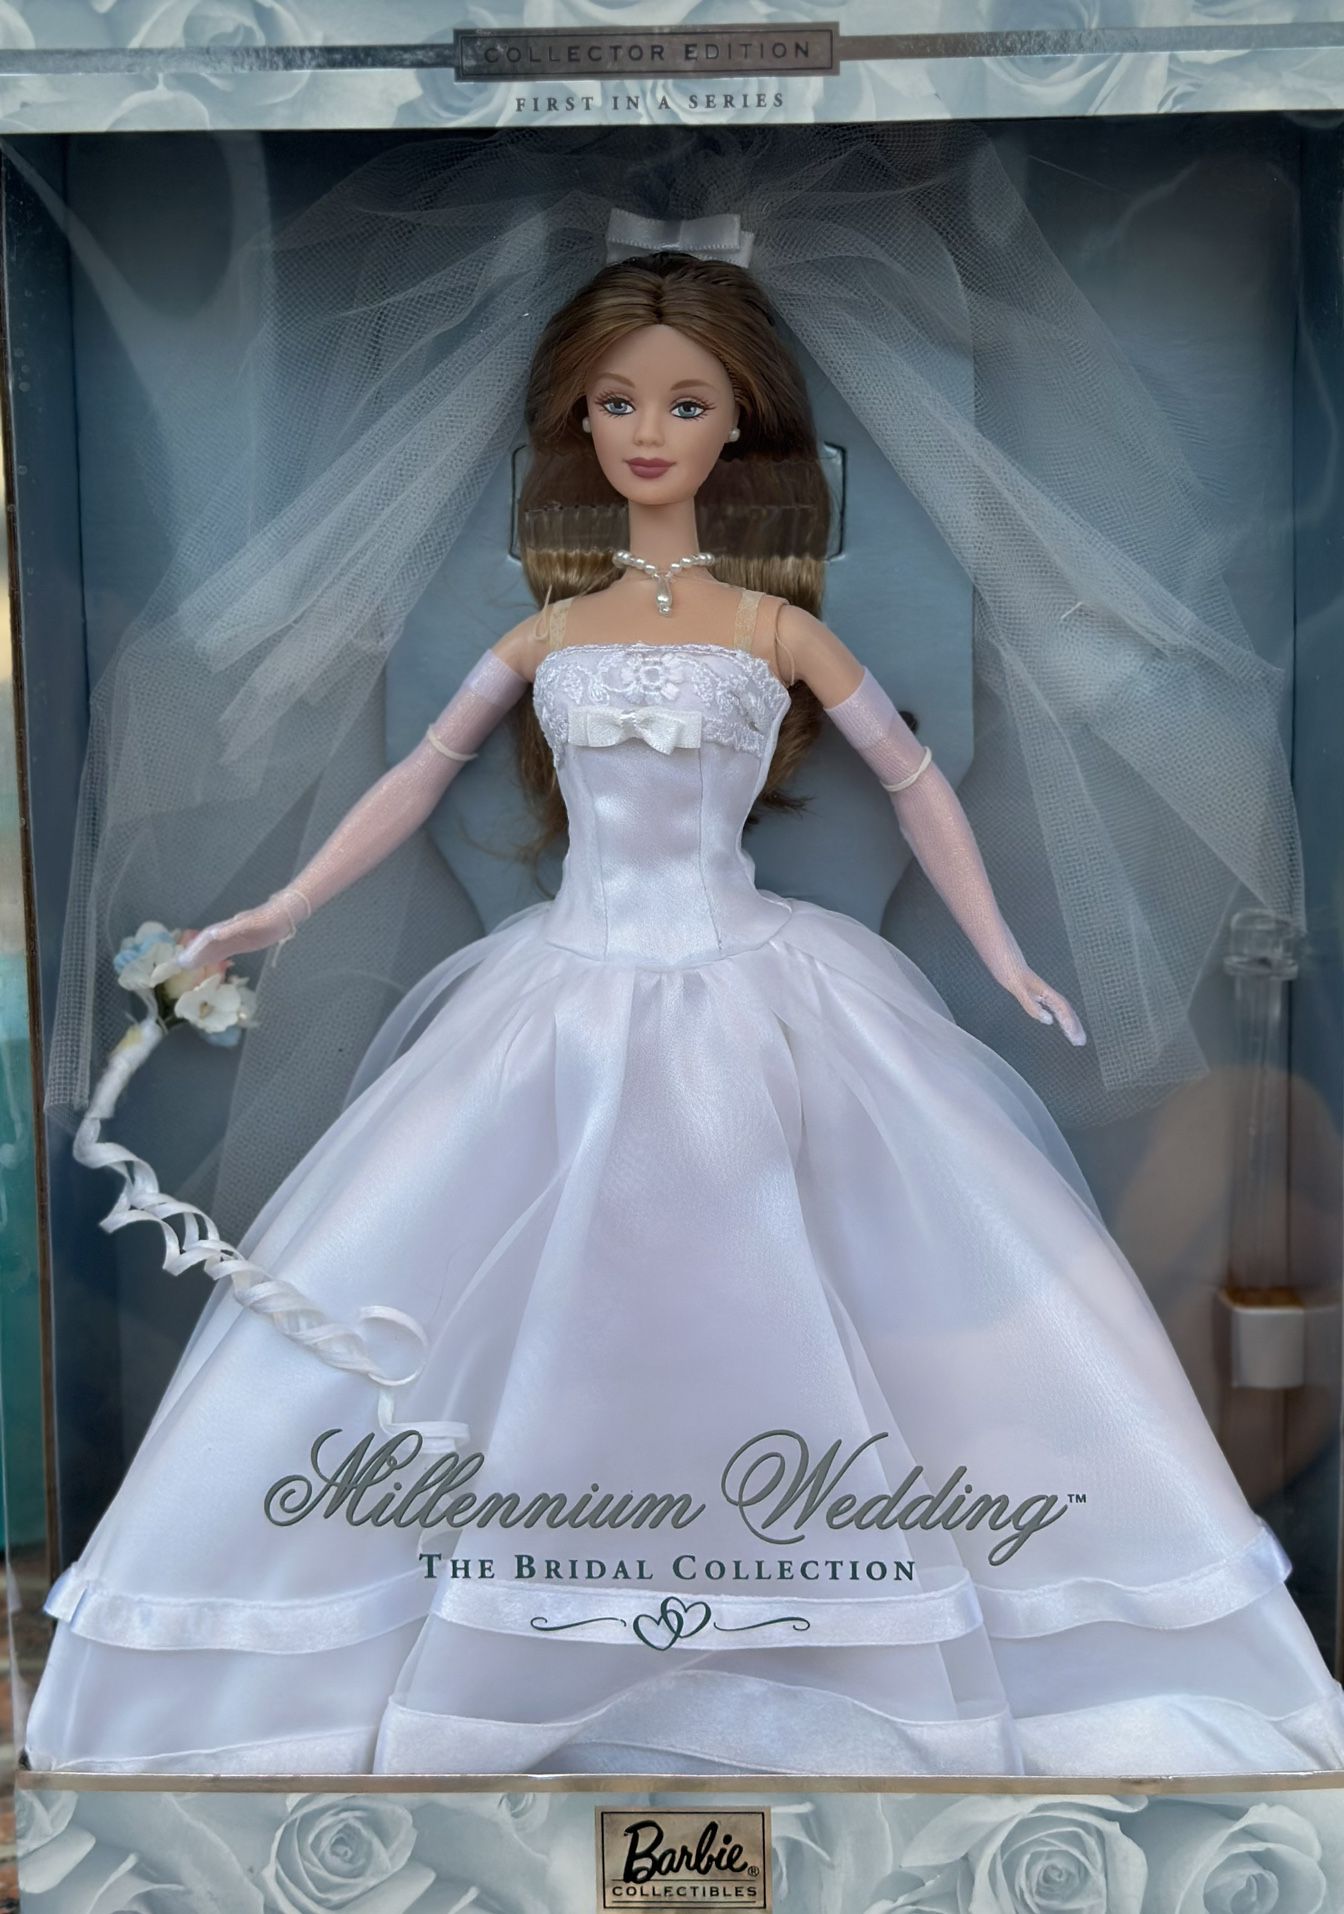 Millennium Wedding -The Bridal Collection Barbie